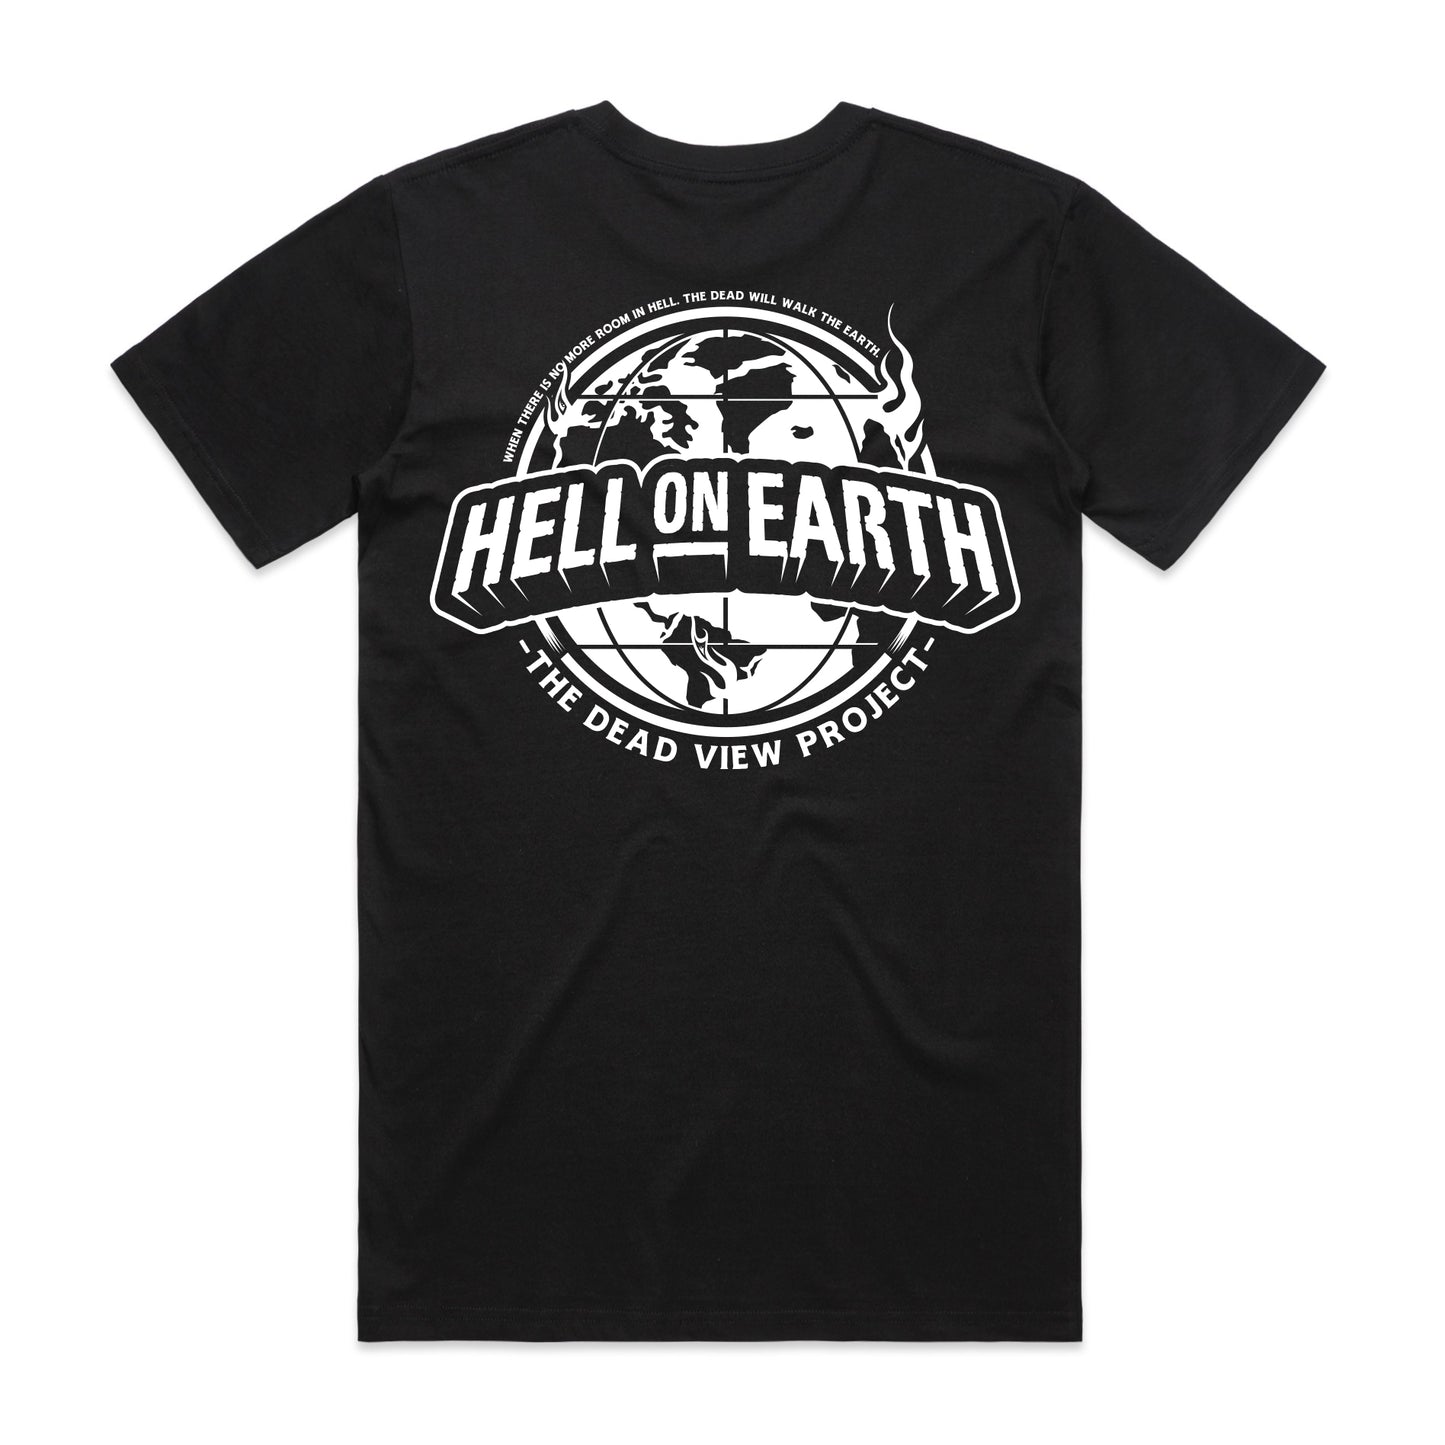 Hell On Earth - deadview